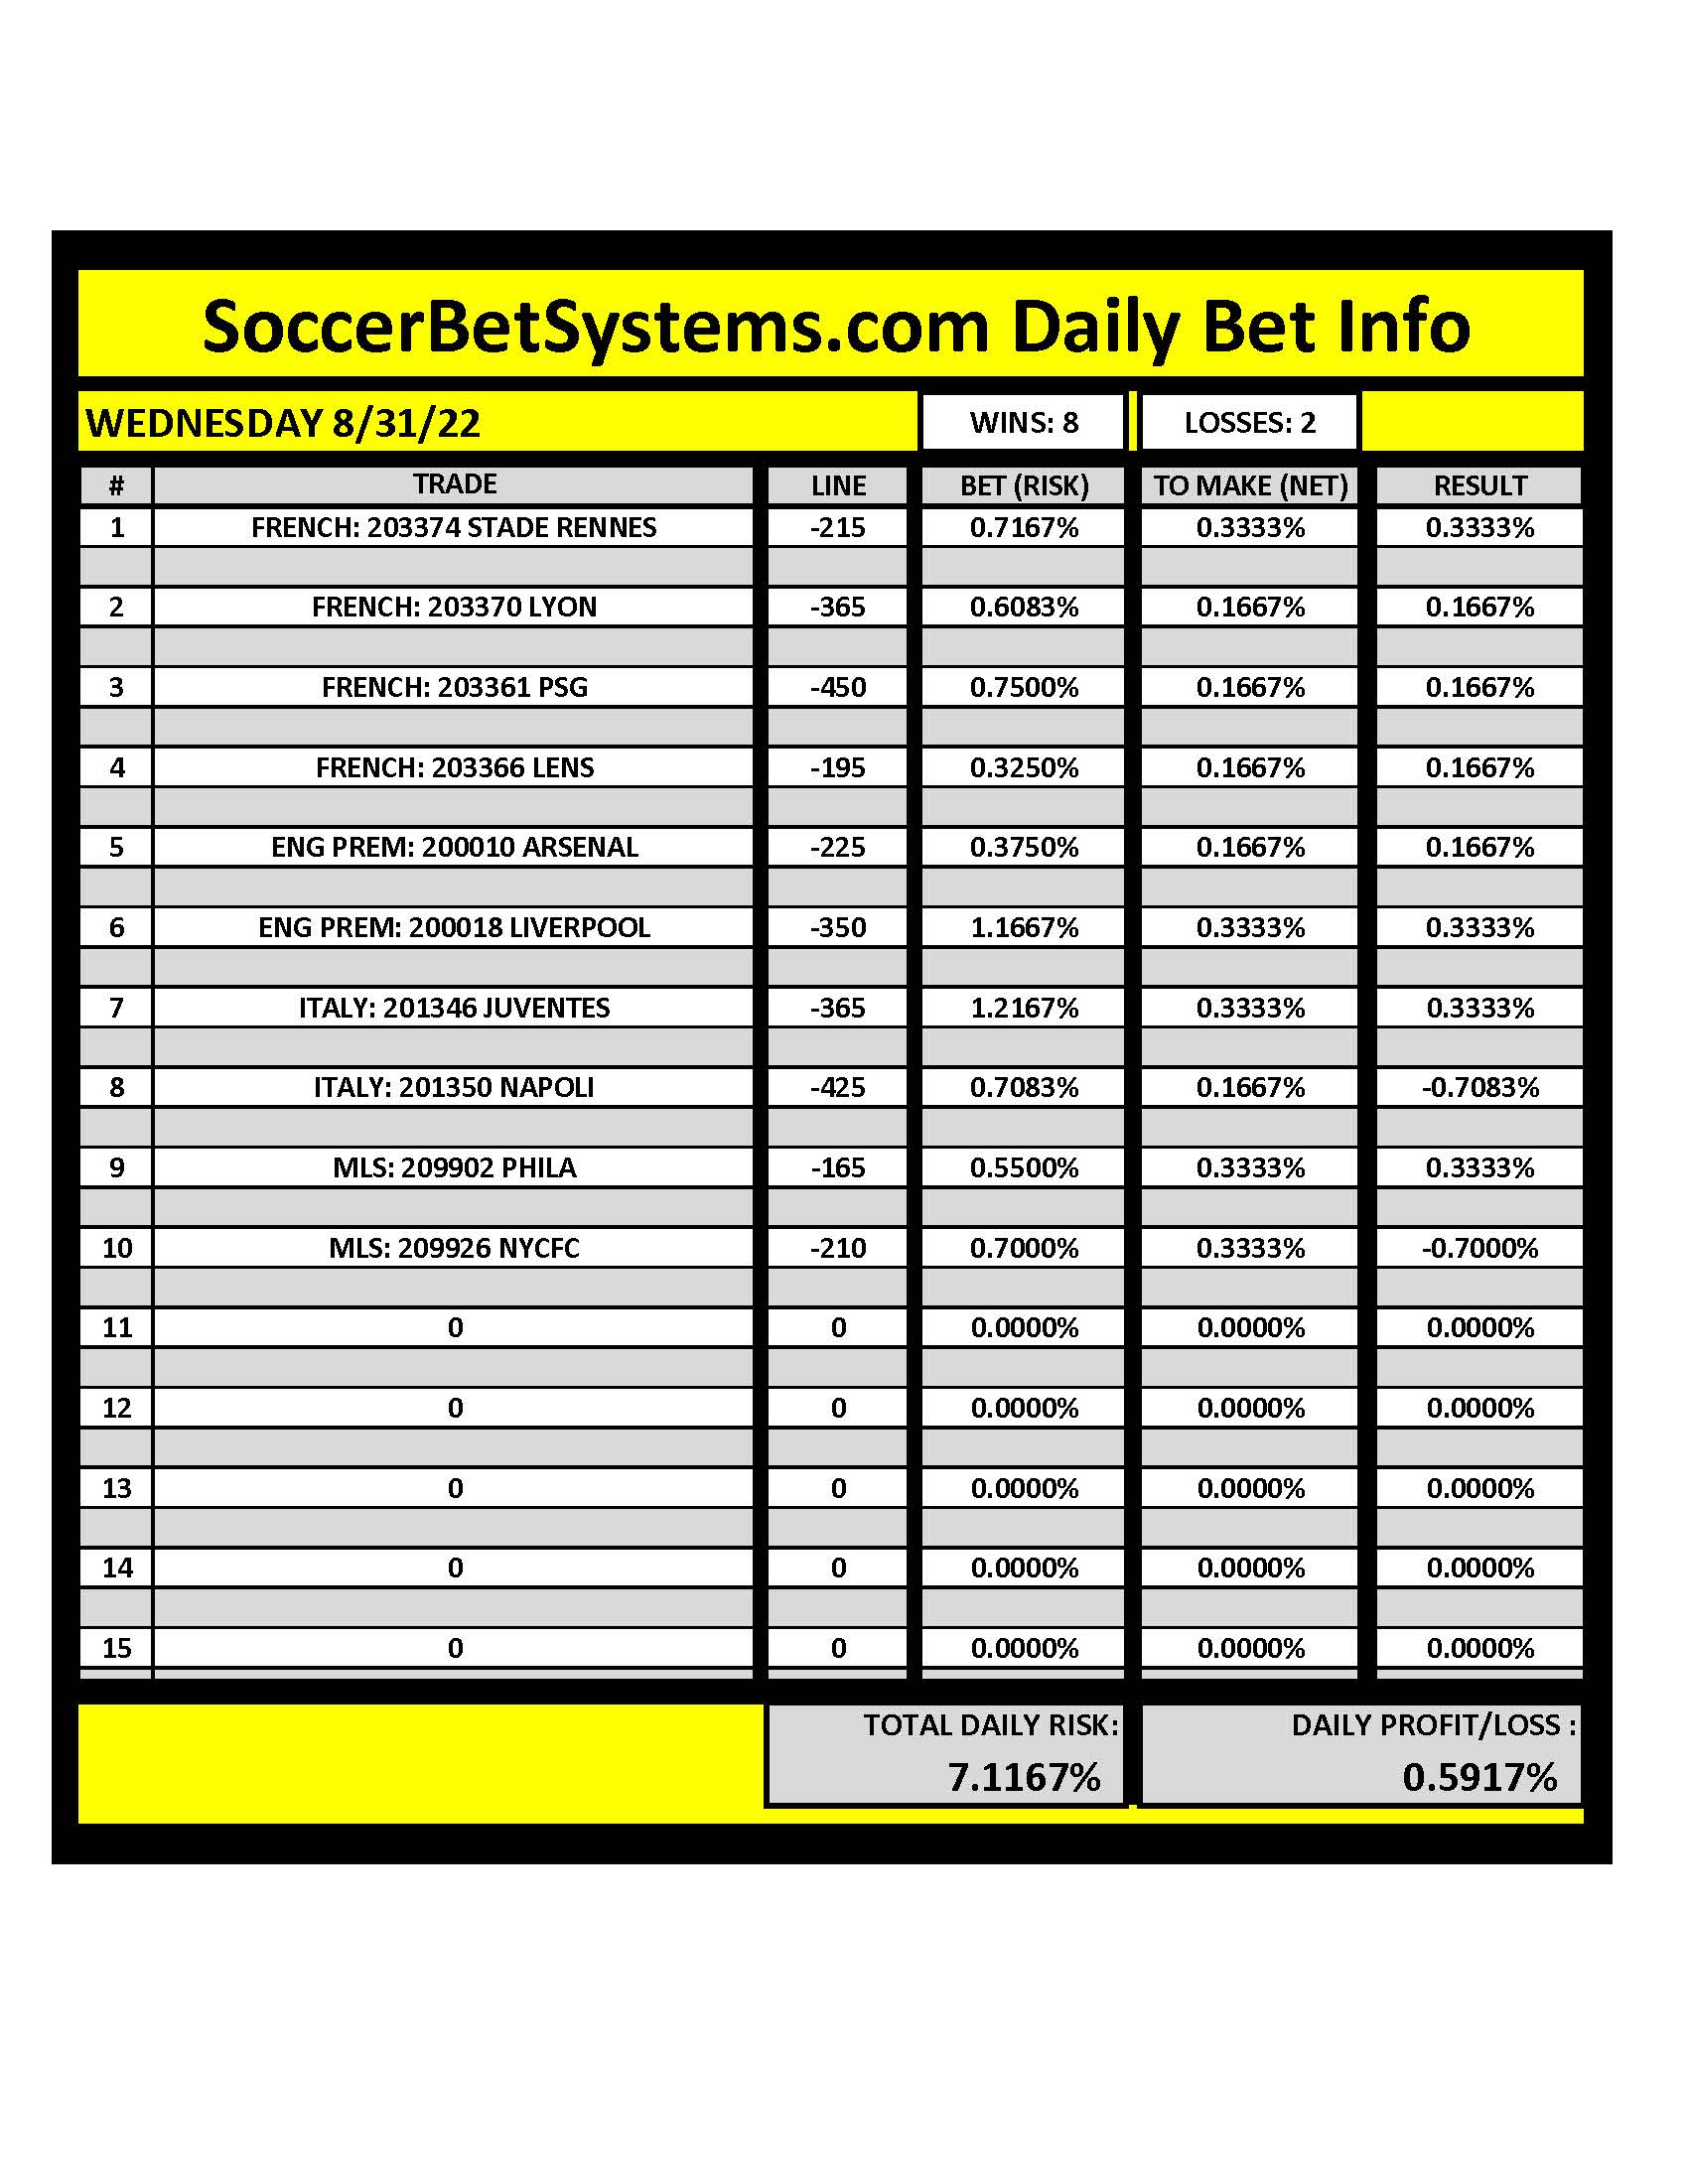 SoccerBetSystems.com 8/31/22 Daily Results